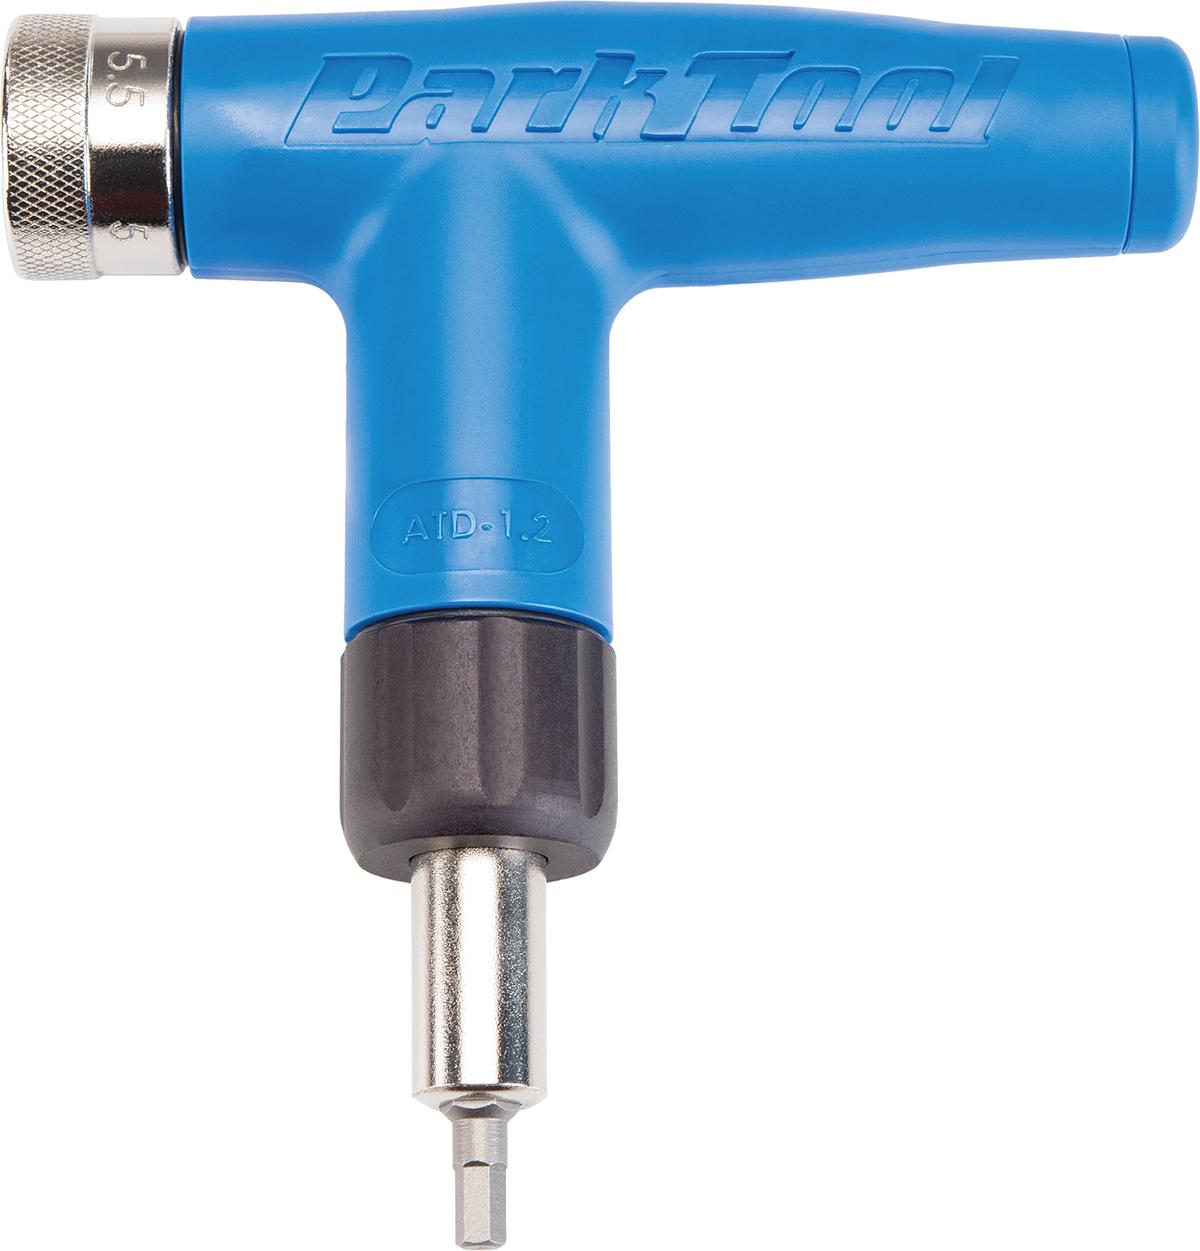 Park Tool Adjustable Torque Driver Atd-1.2 - Blue